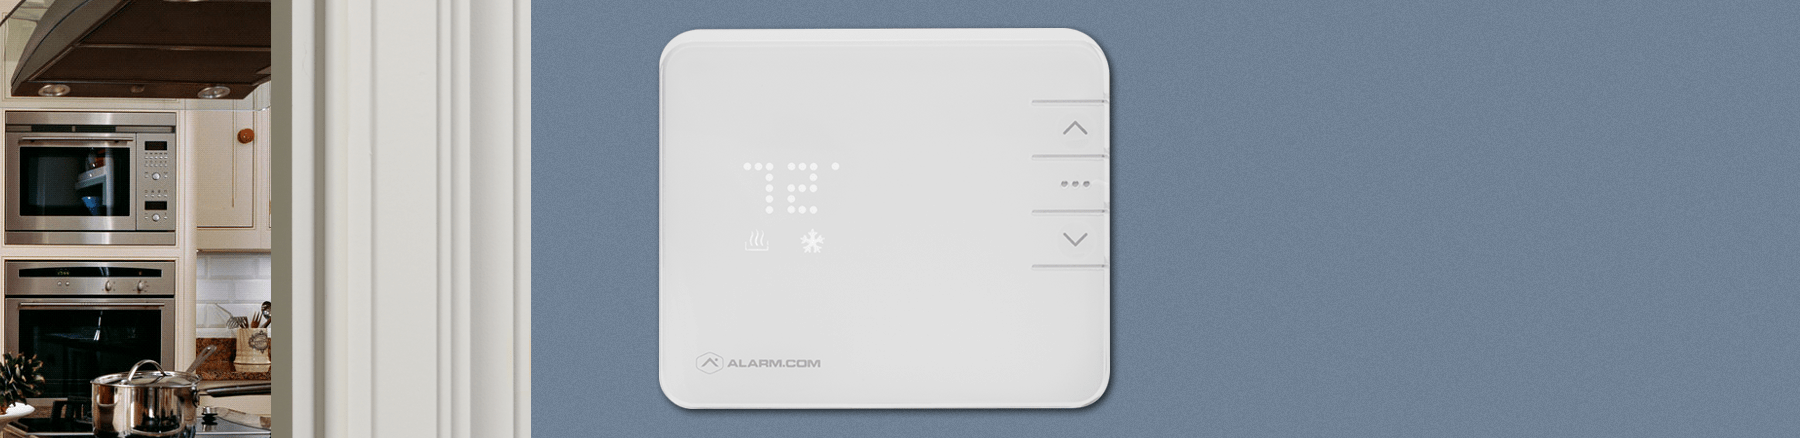 alarm.com thermostat